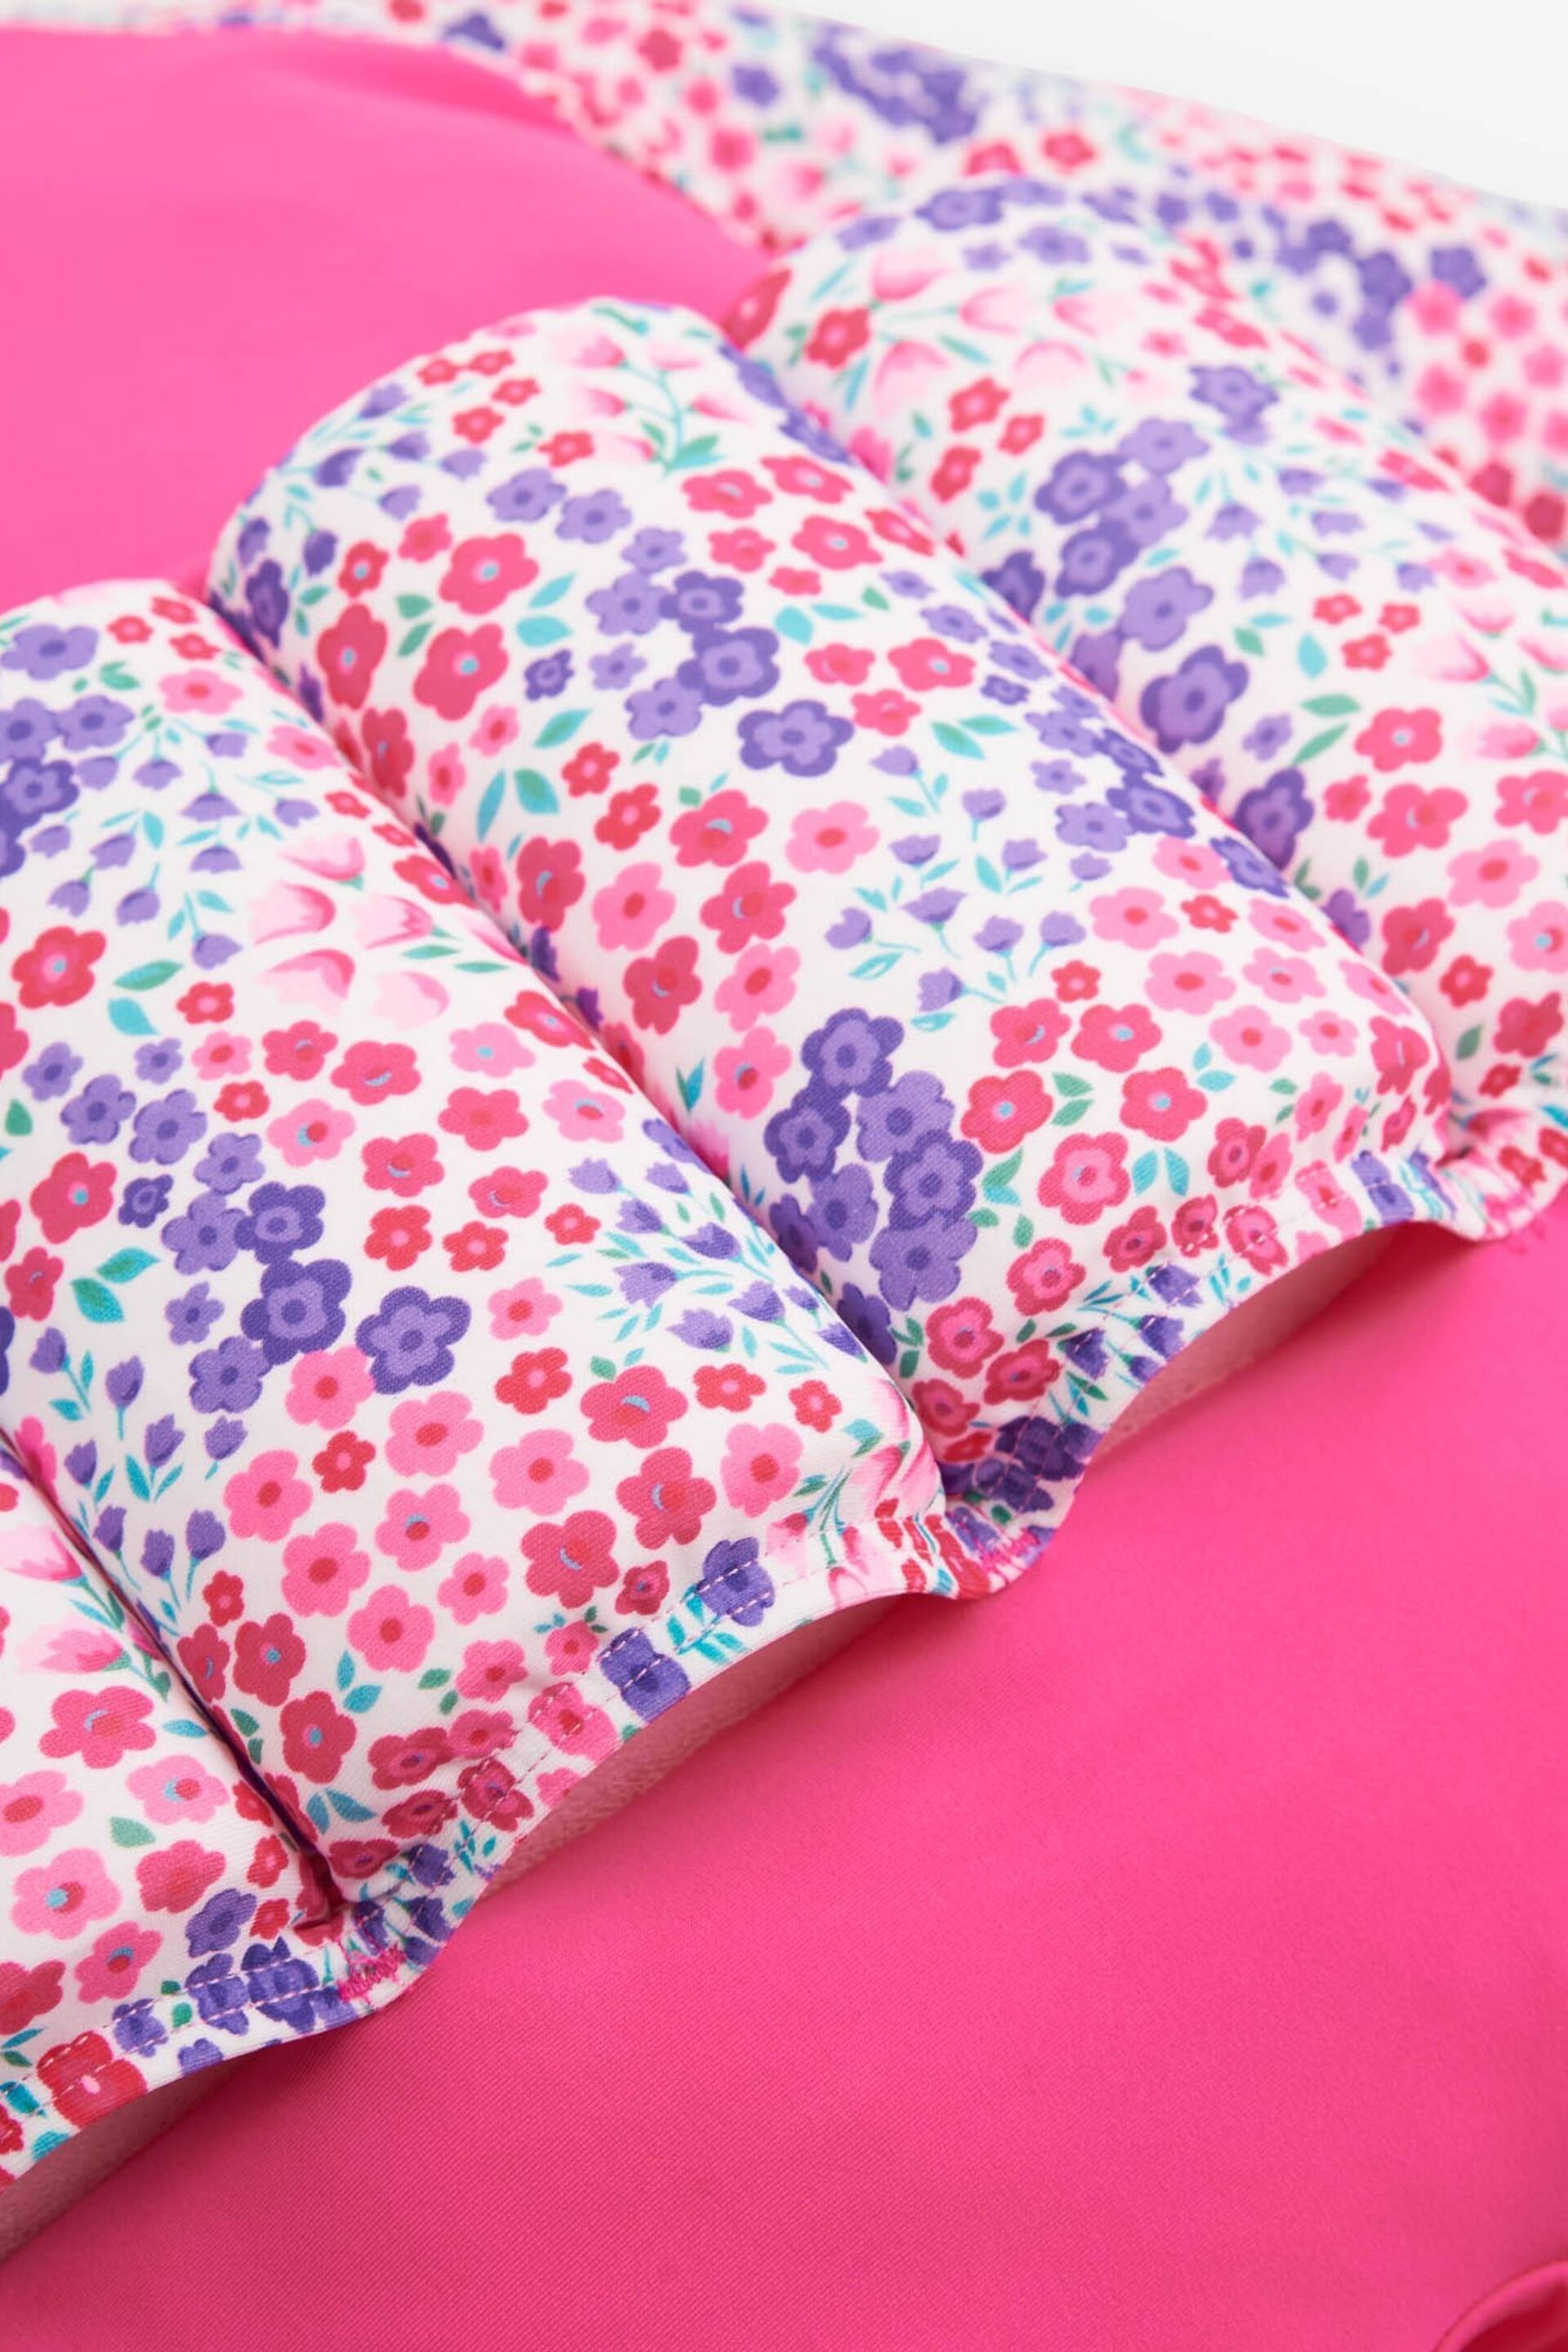 JoJo Maman Bébé Pink Floral UPF 50 Sun Protection Float Suit - Image 6 of 6